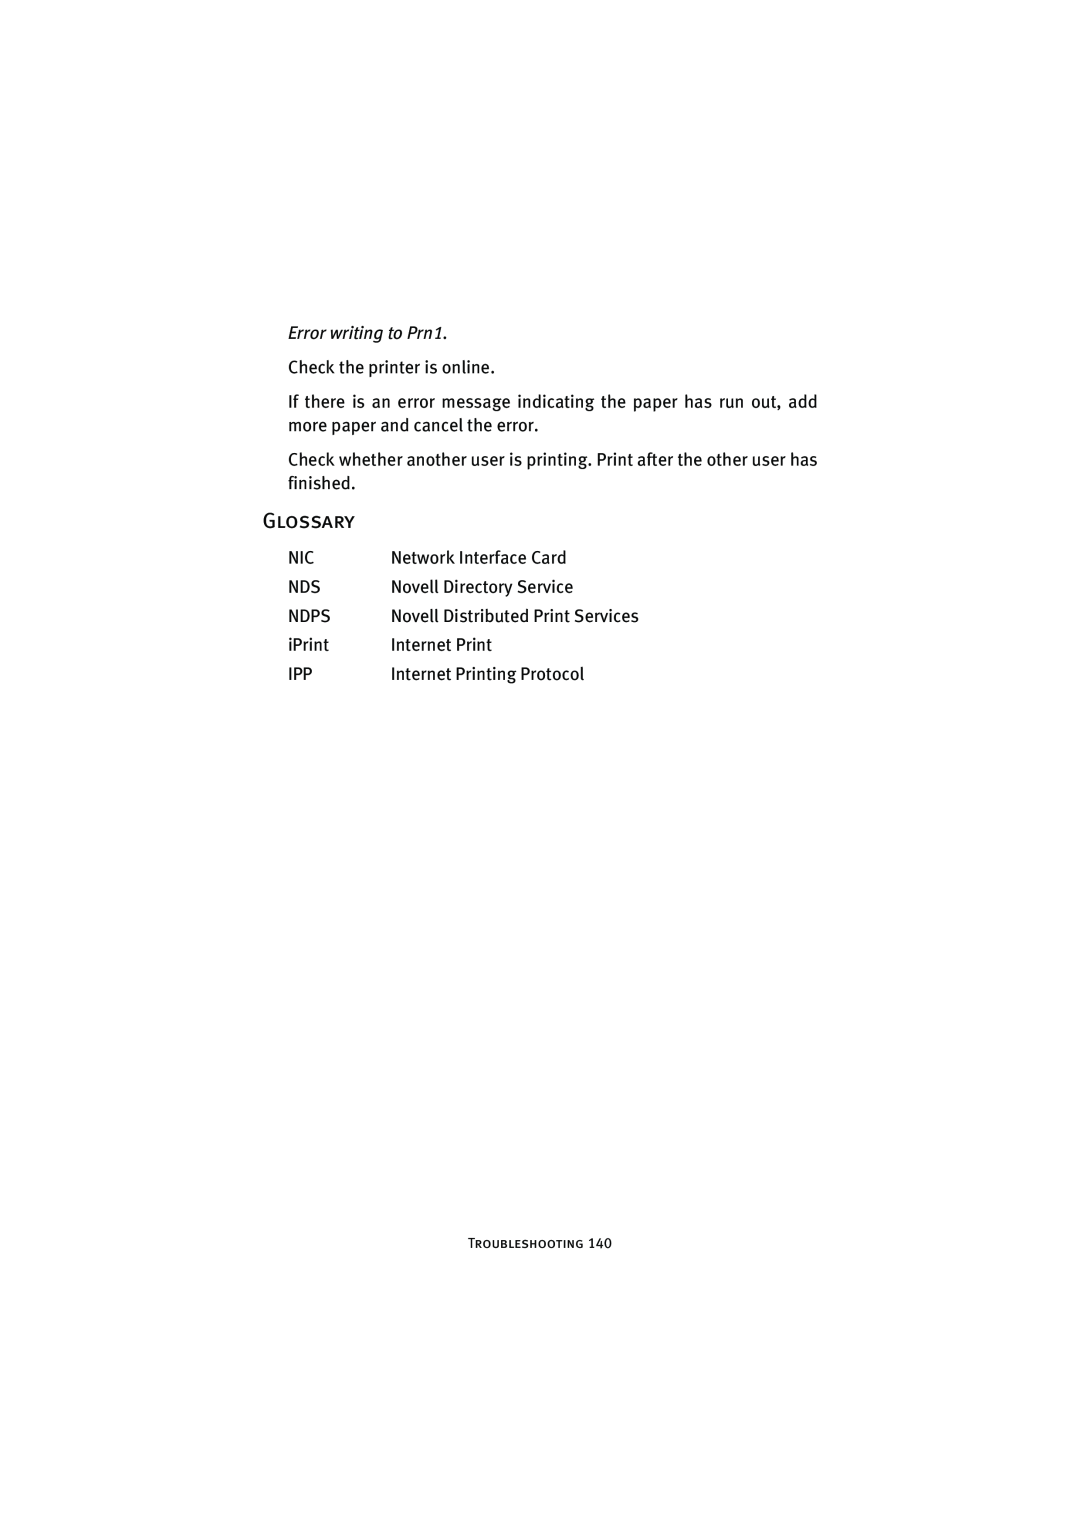 Oki 7300e manual Glossary, Error writing to Prn1 